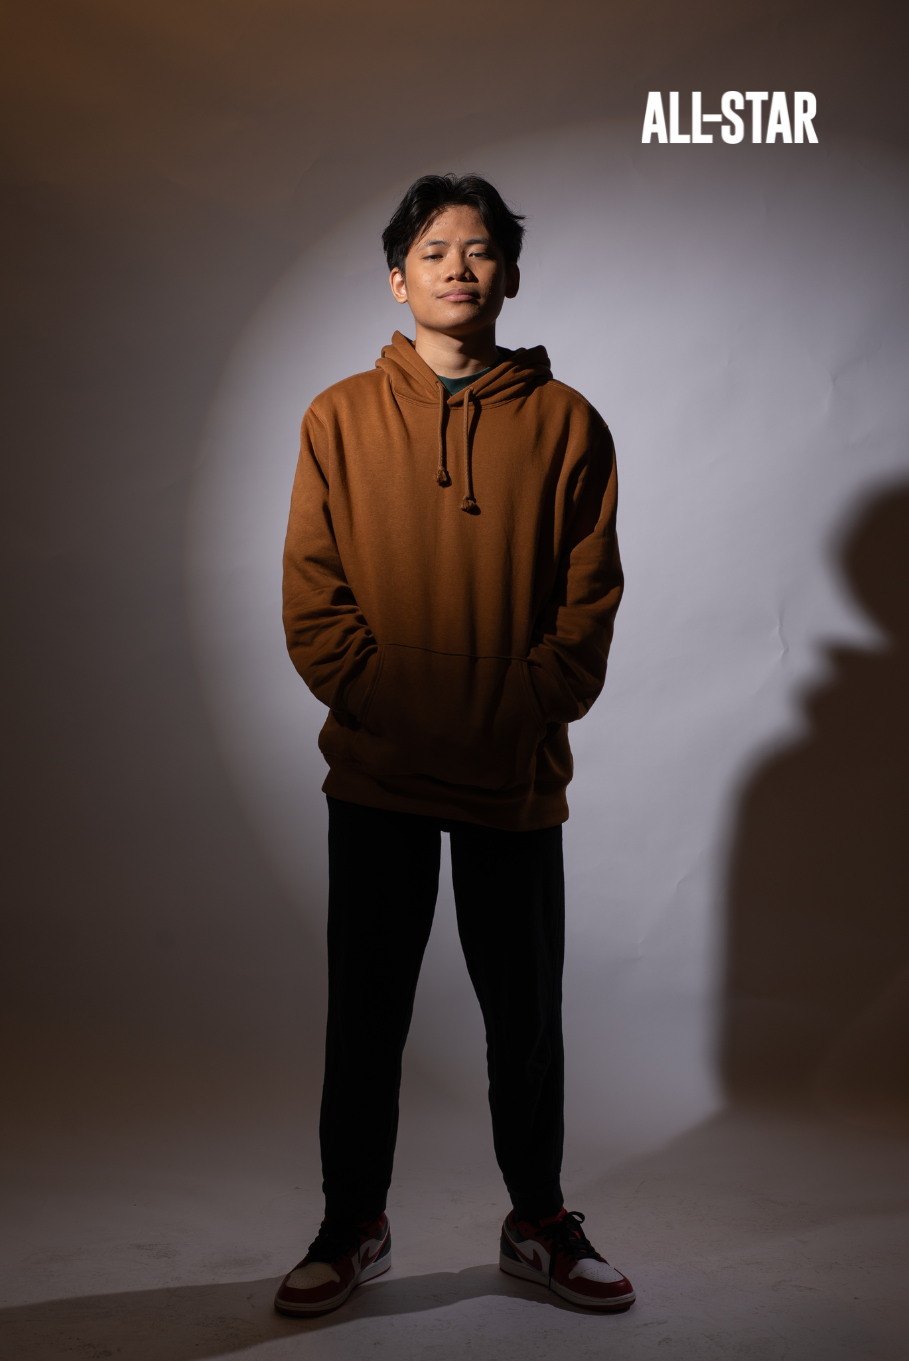 Filipino boy wearing hoodie, studio